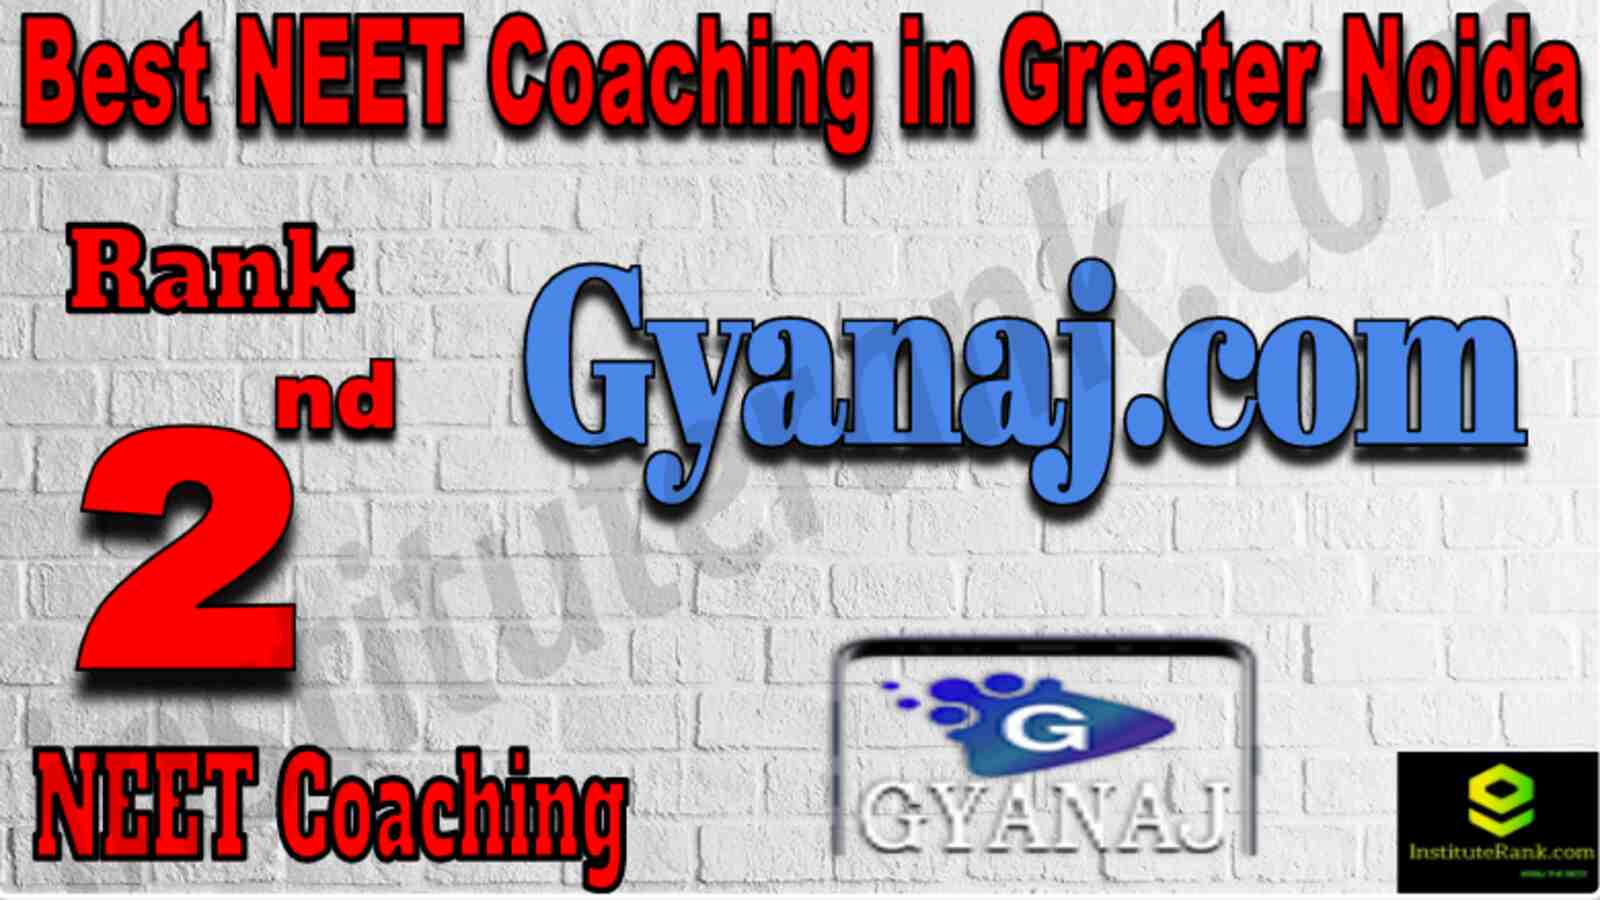 Rank 2 Best NEET Coaching in Greater Noida